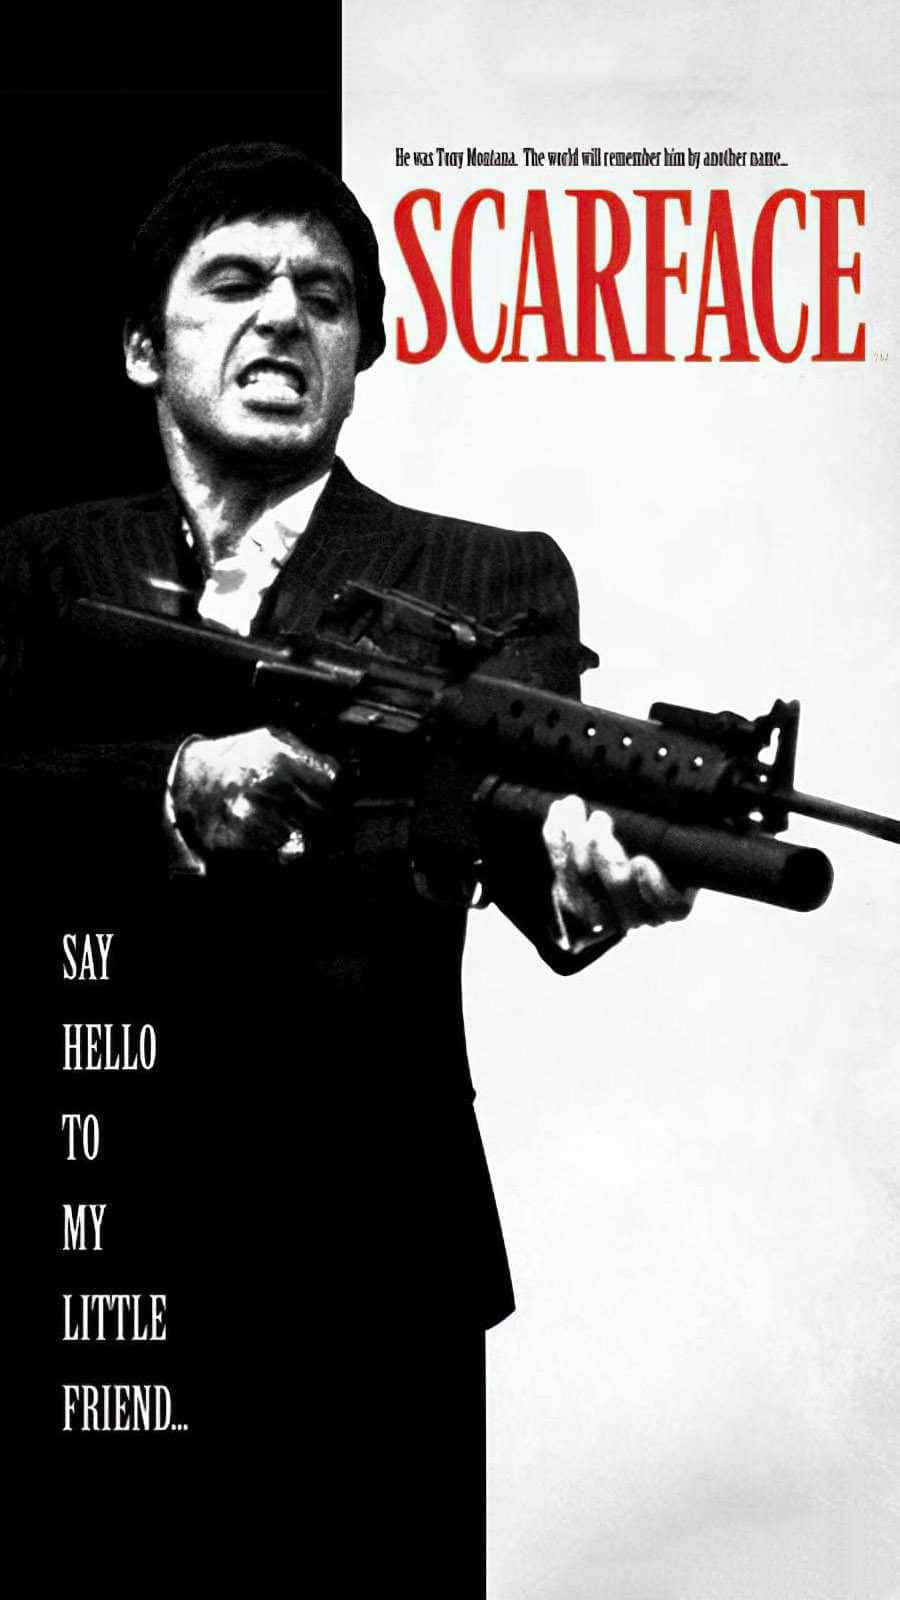 Tony Montana establishing his empire in the thrilling crime drama, Scarface.